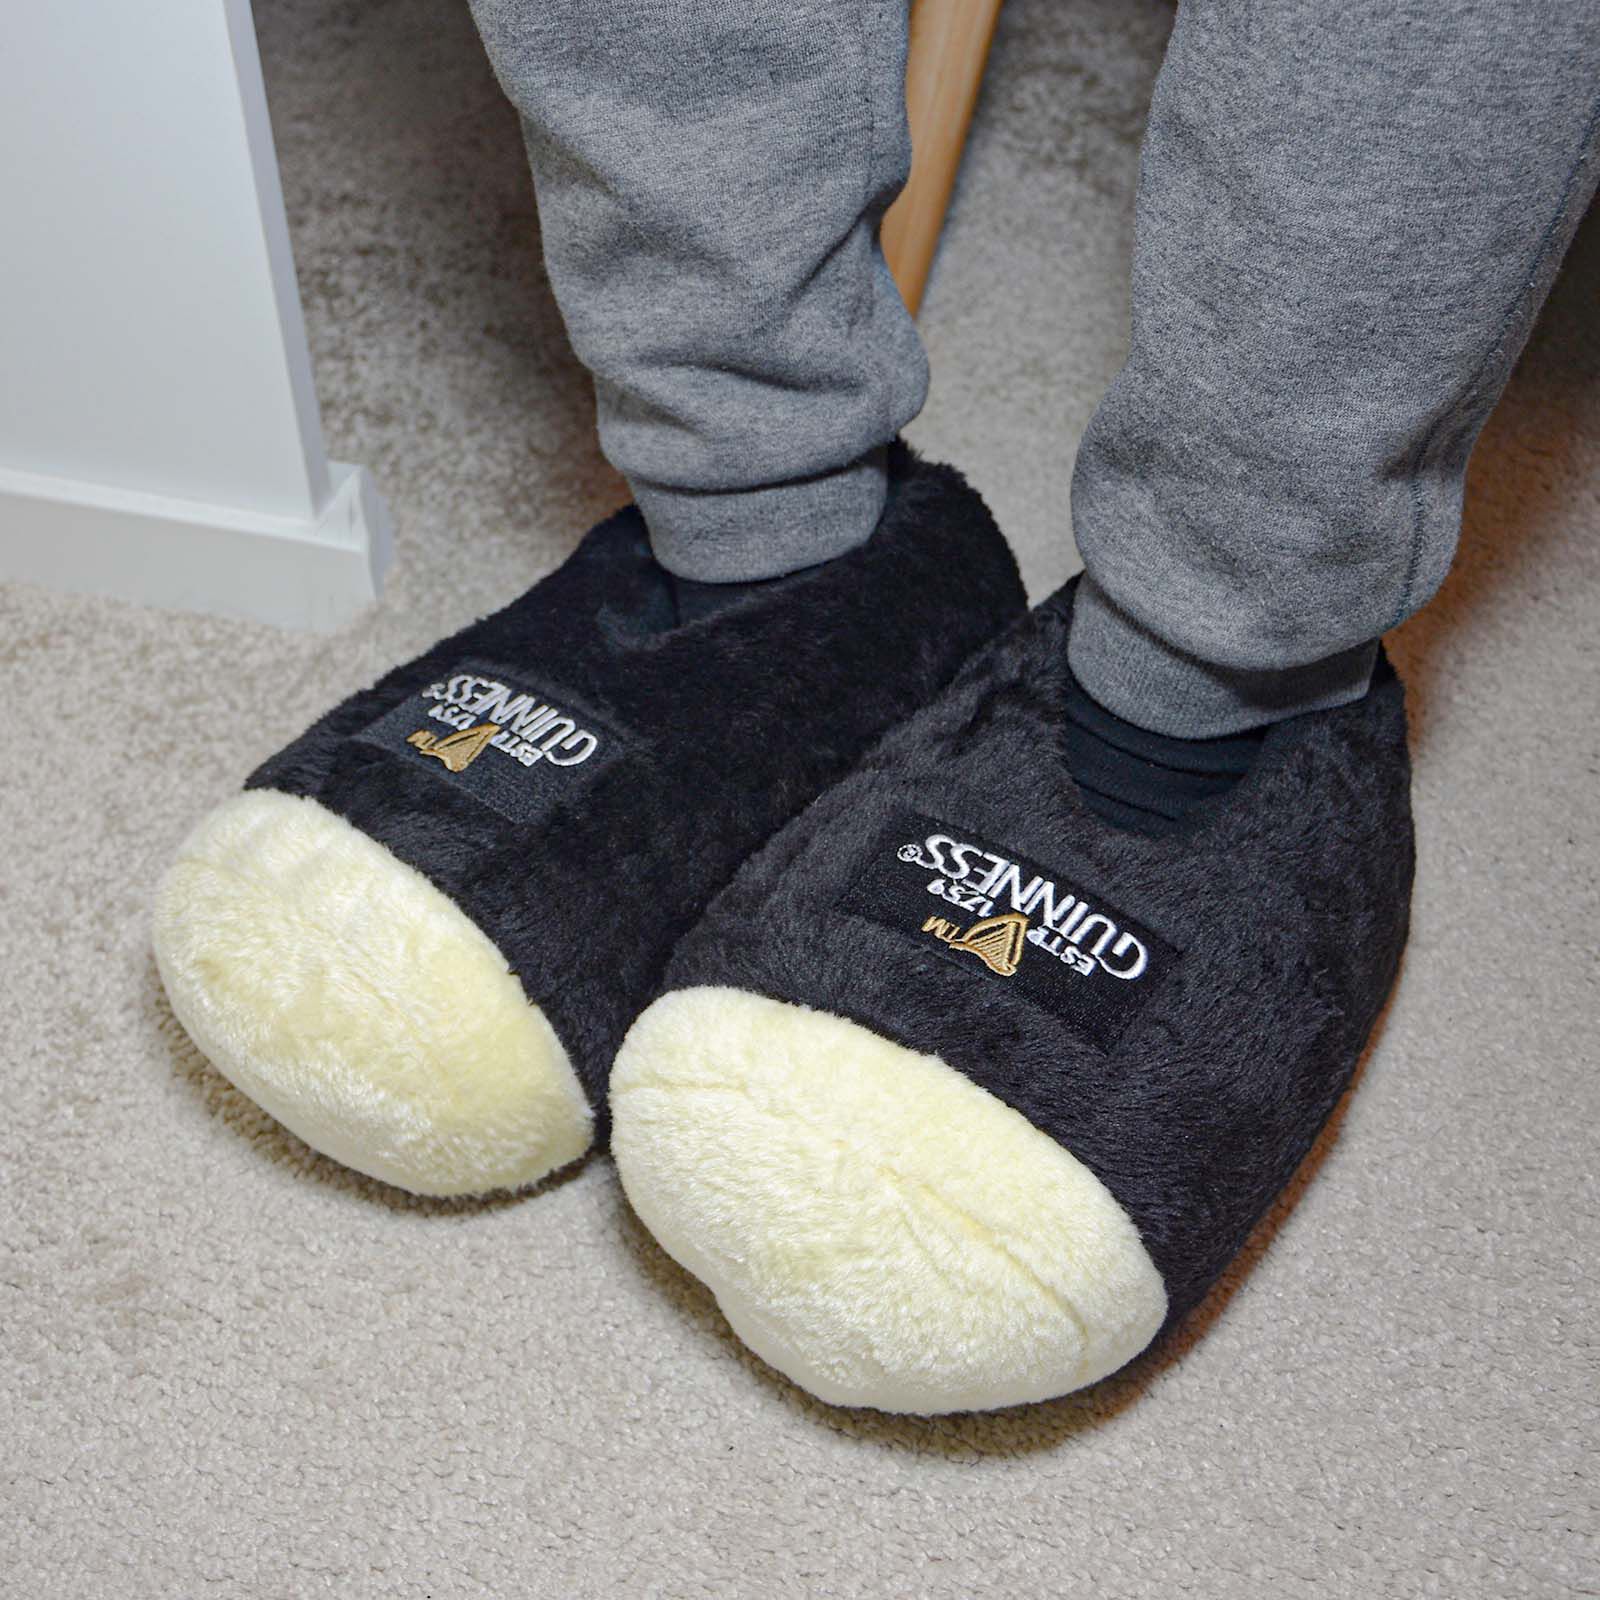 giant slippers